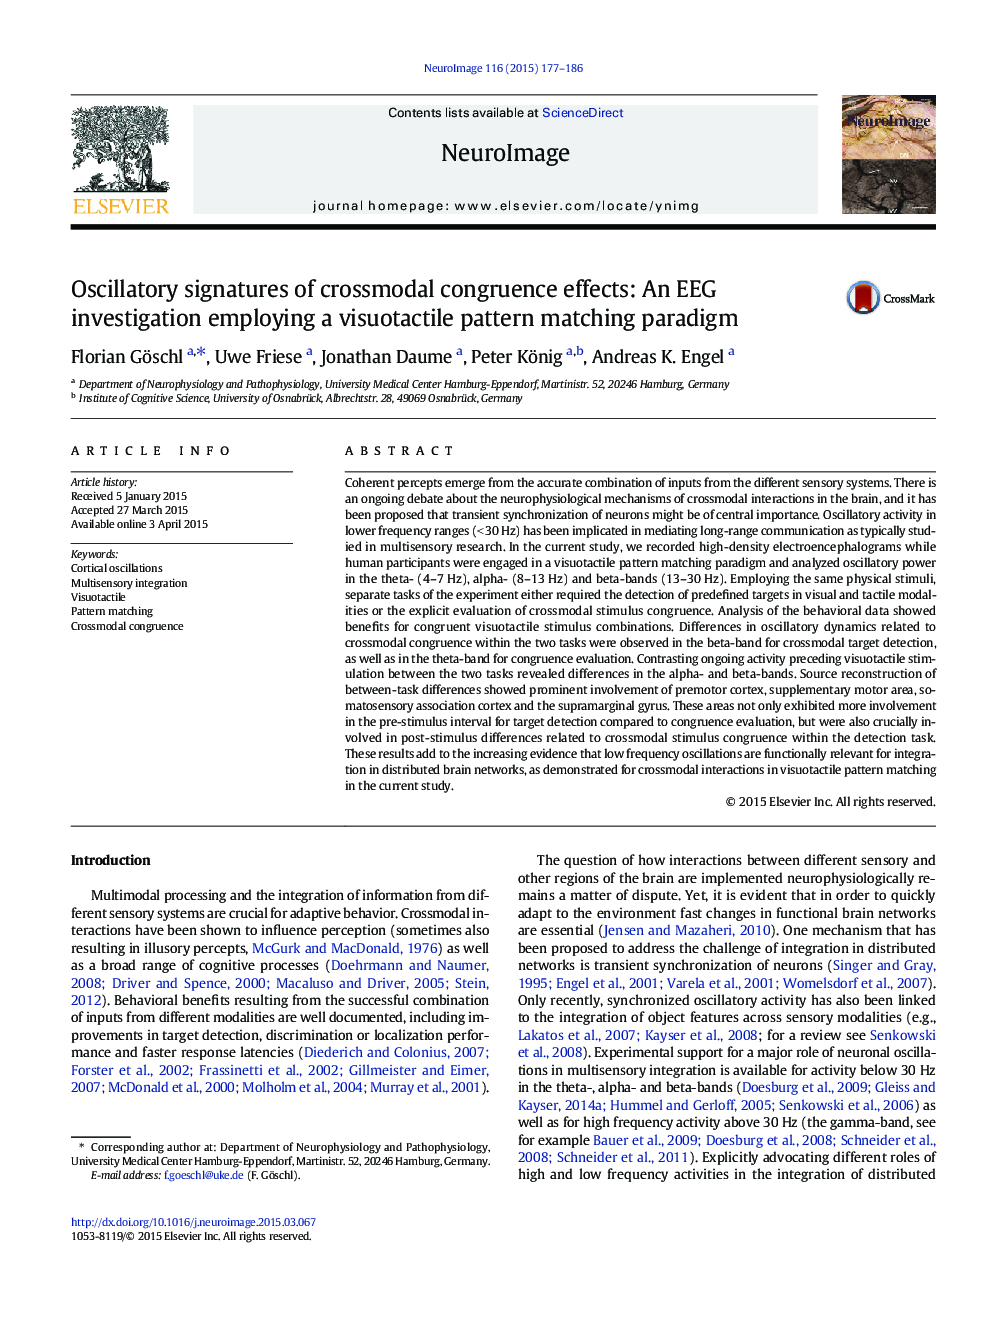 Oscillatory signatures of crossmodal congruence effects: An EEG investigation employing a visuotactile pattern matching paradigm